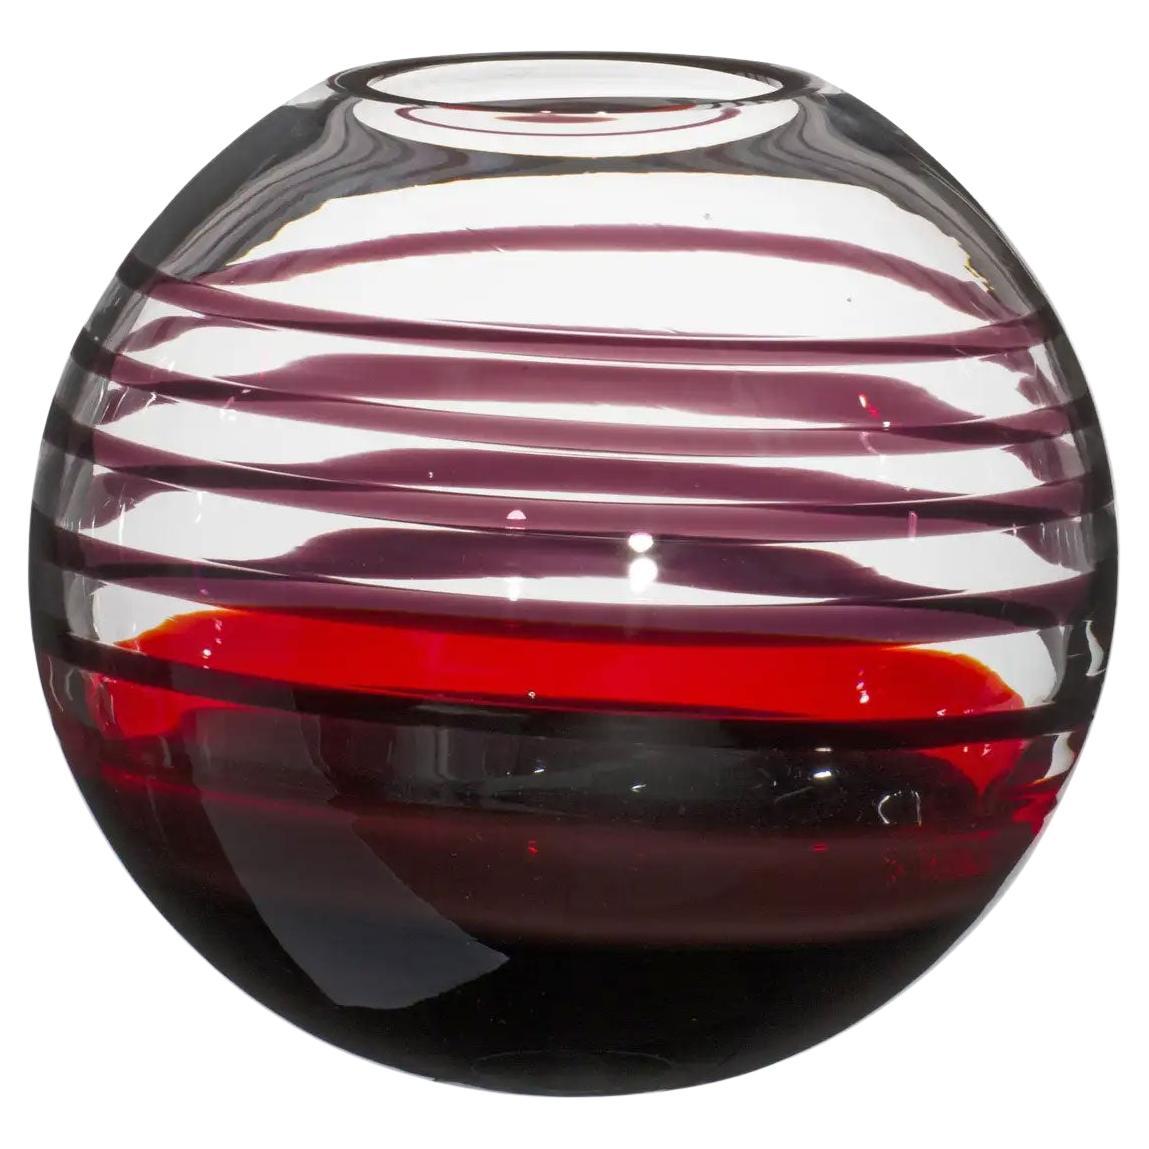 Small Sfera Vase in Black and Red by Carlo Moretti For Sale